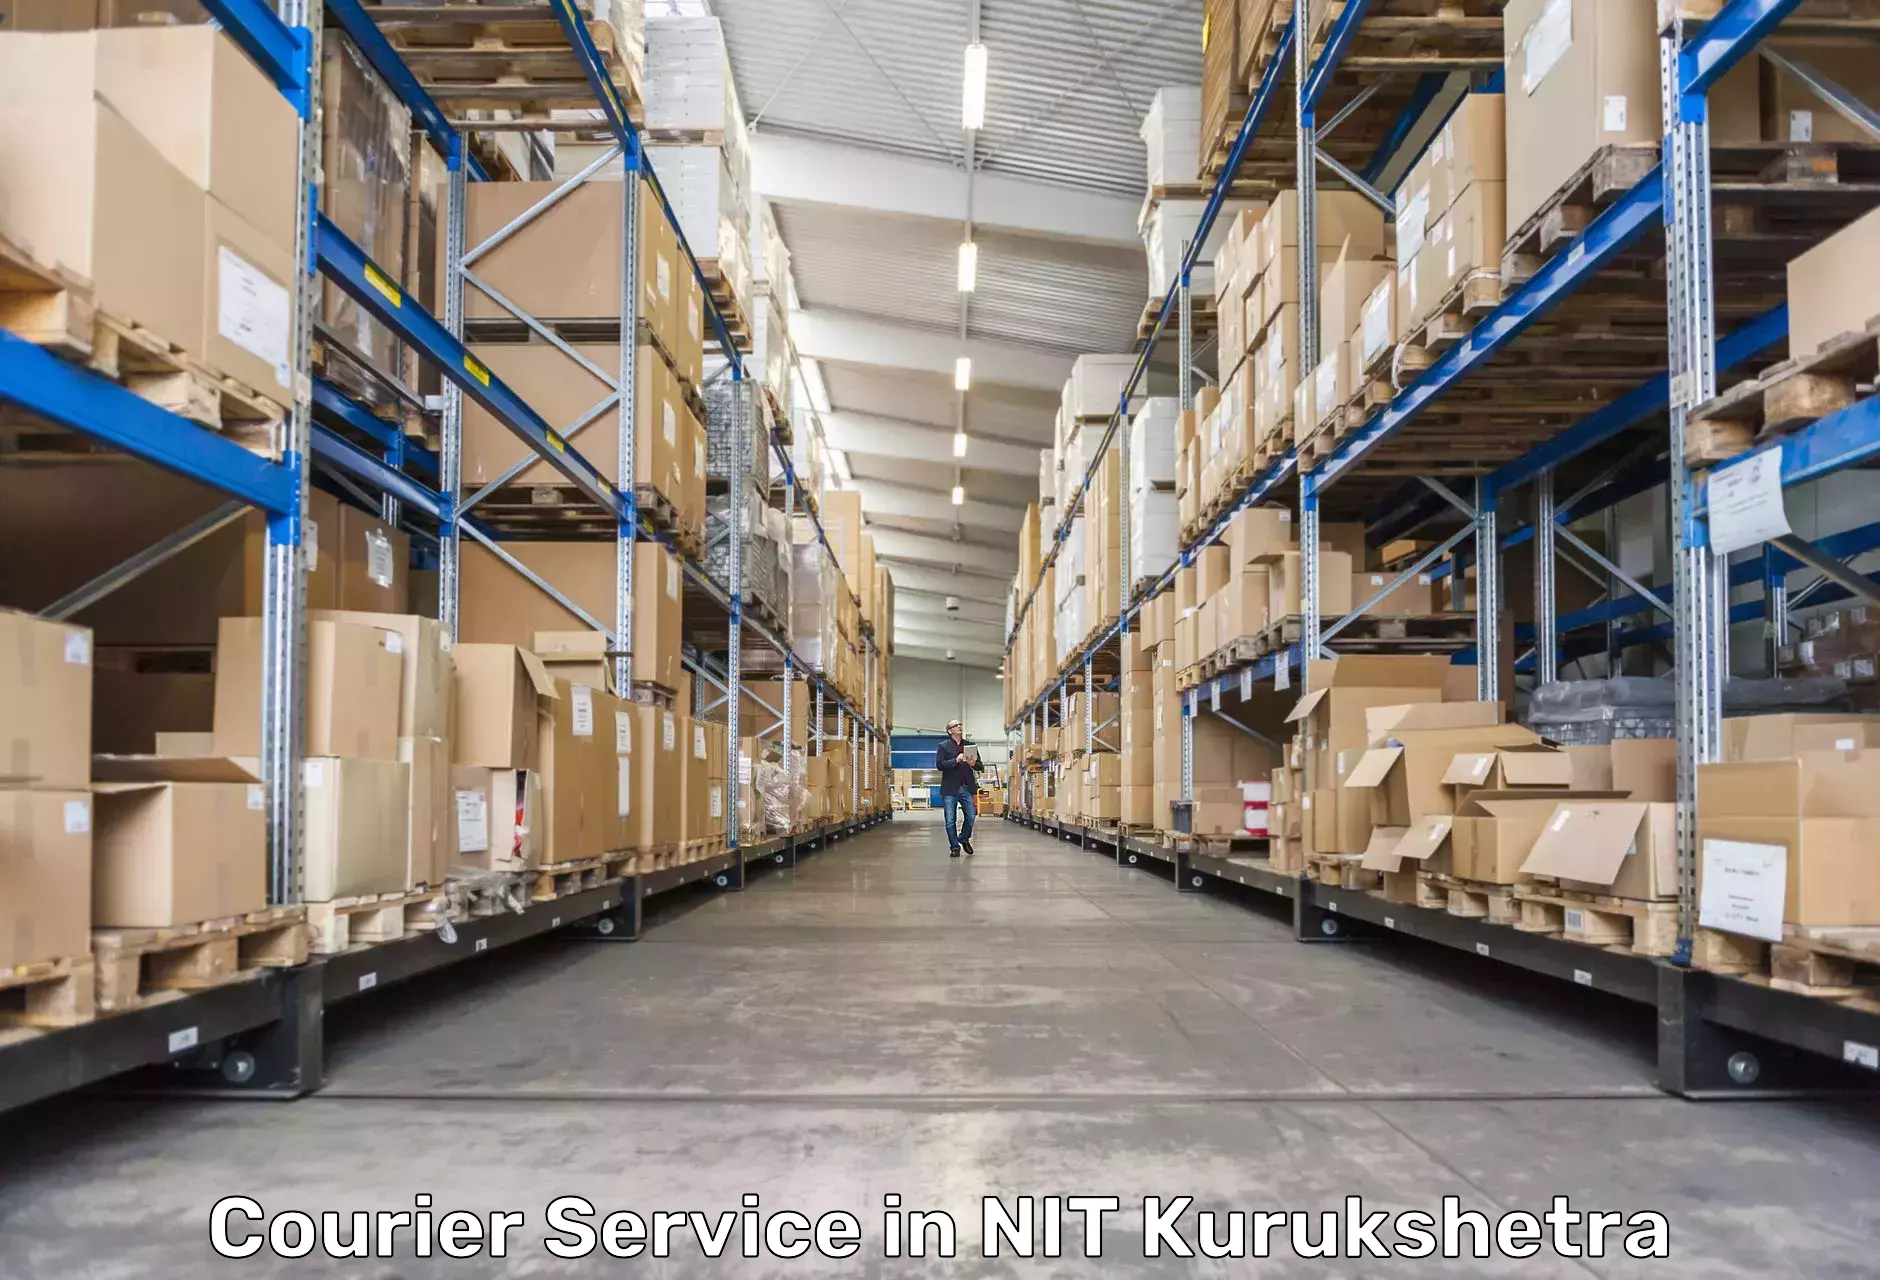 Premium delivery services in NIT Kurukshetra